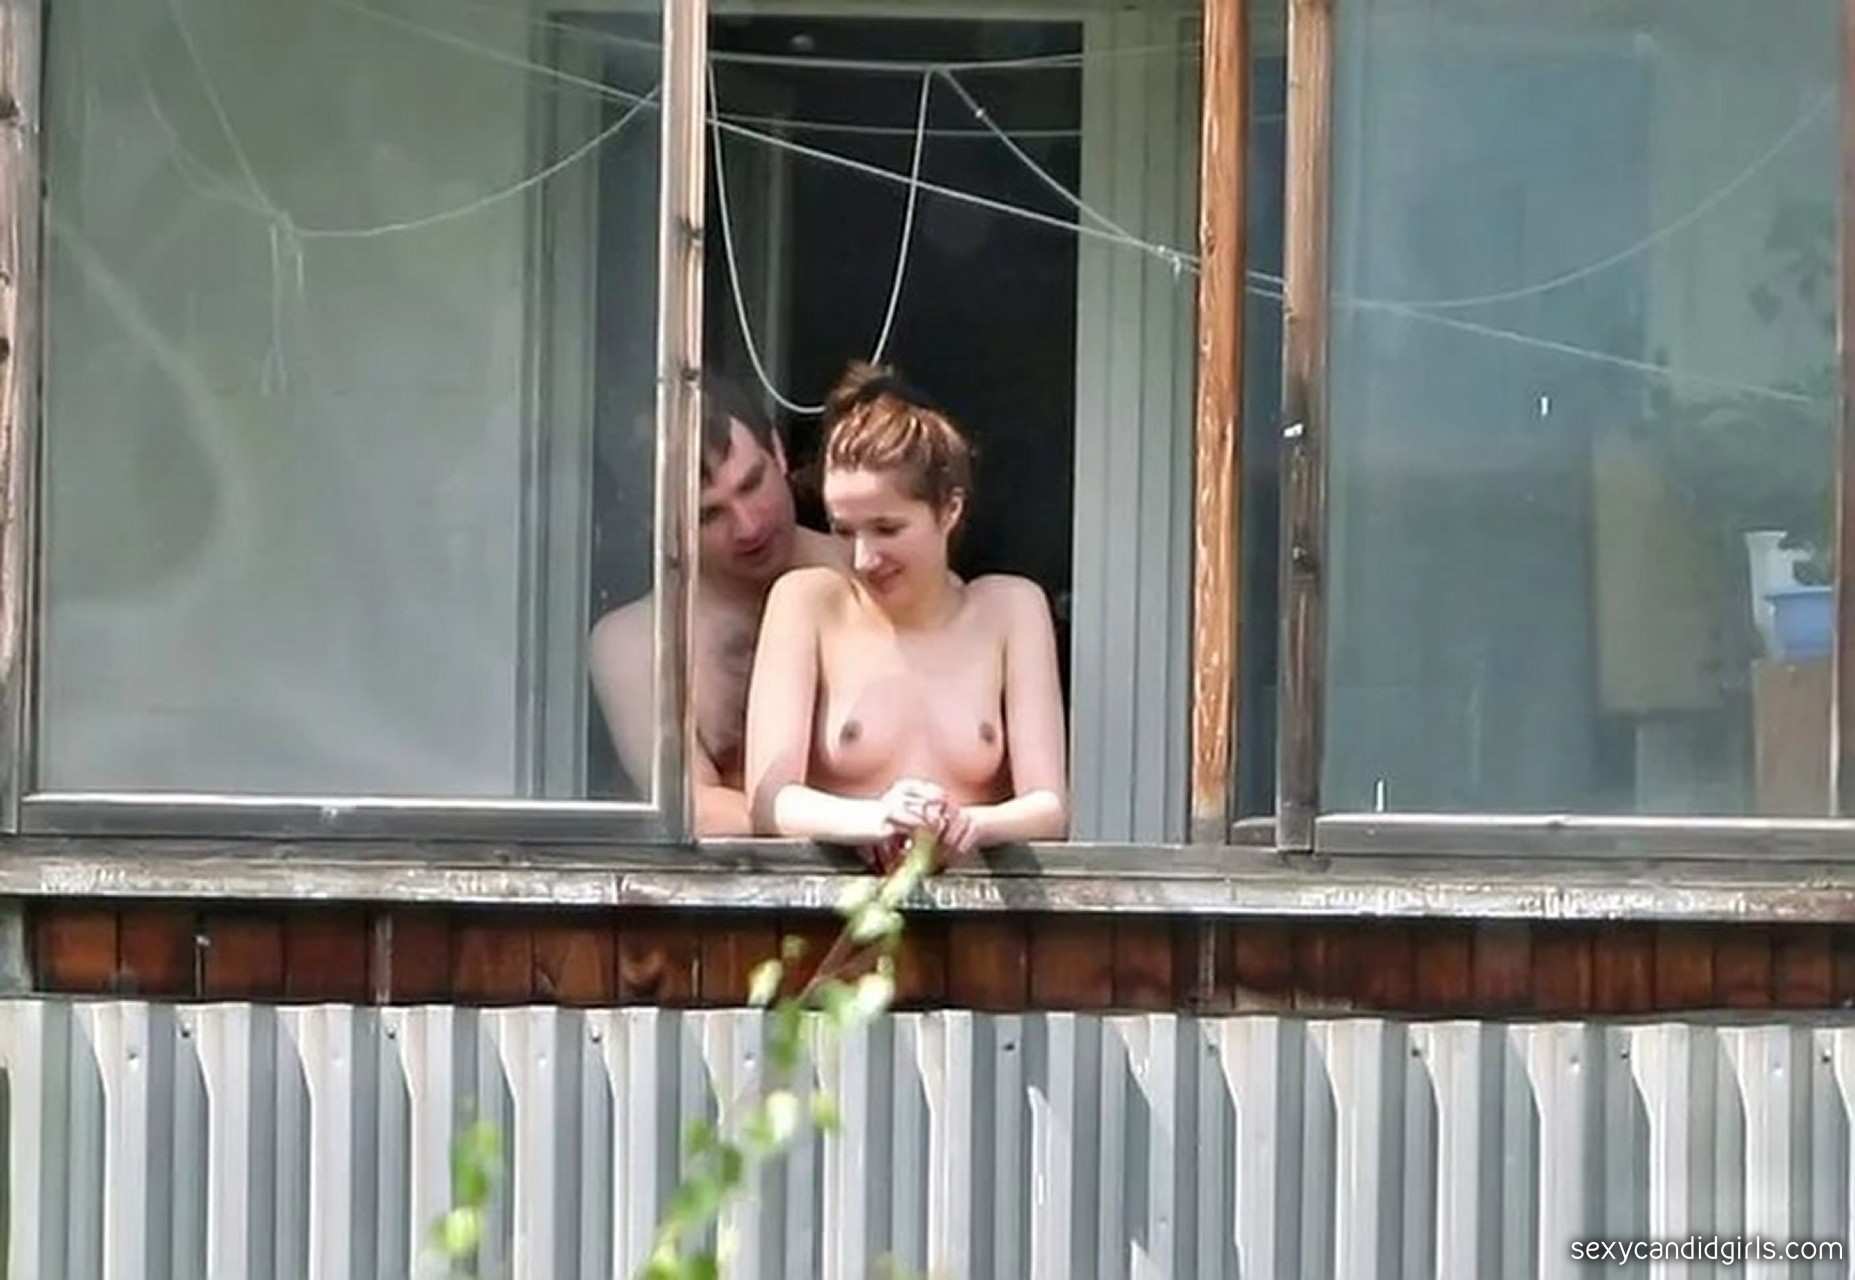 Spying Nude Neighbour Girls